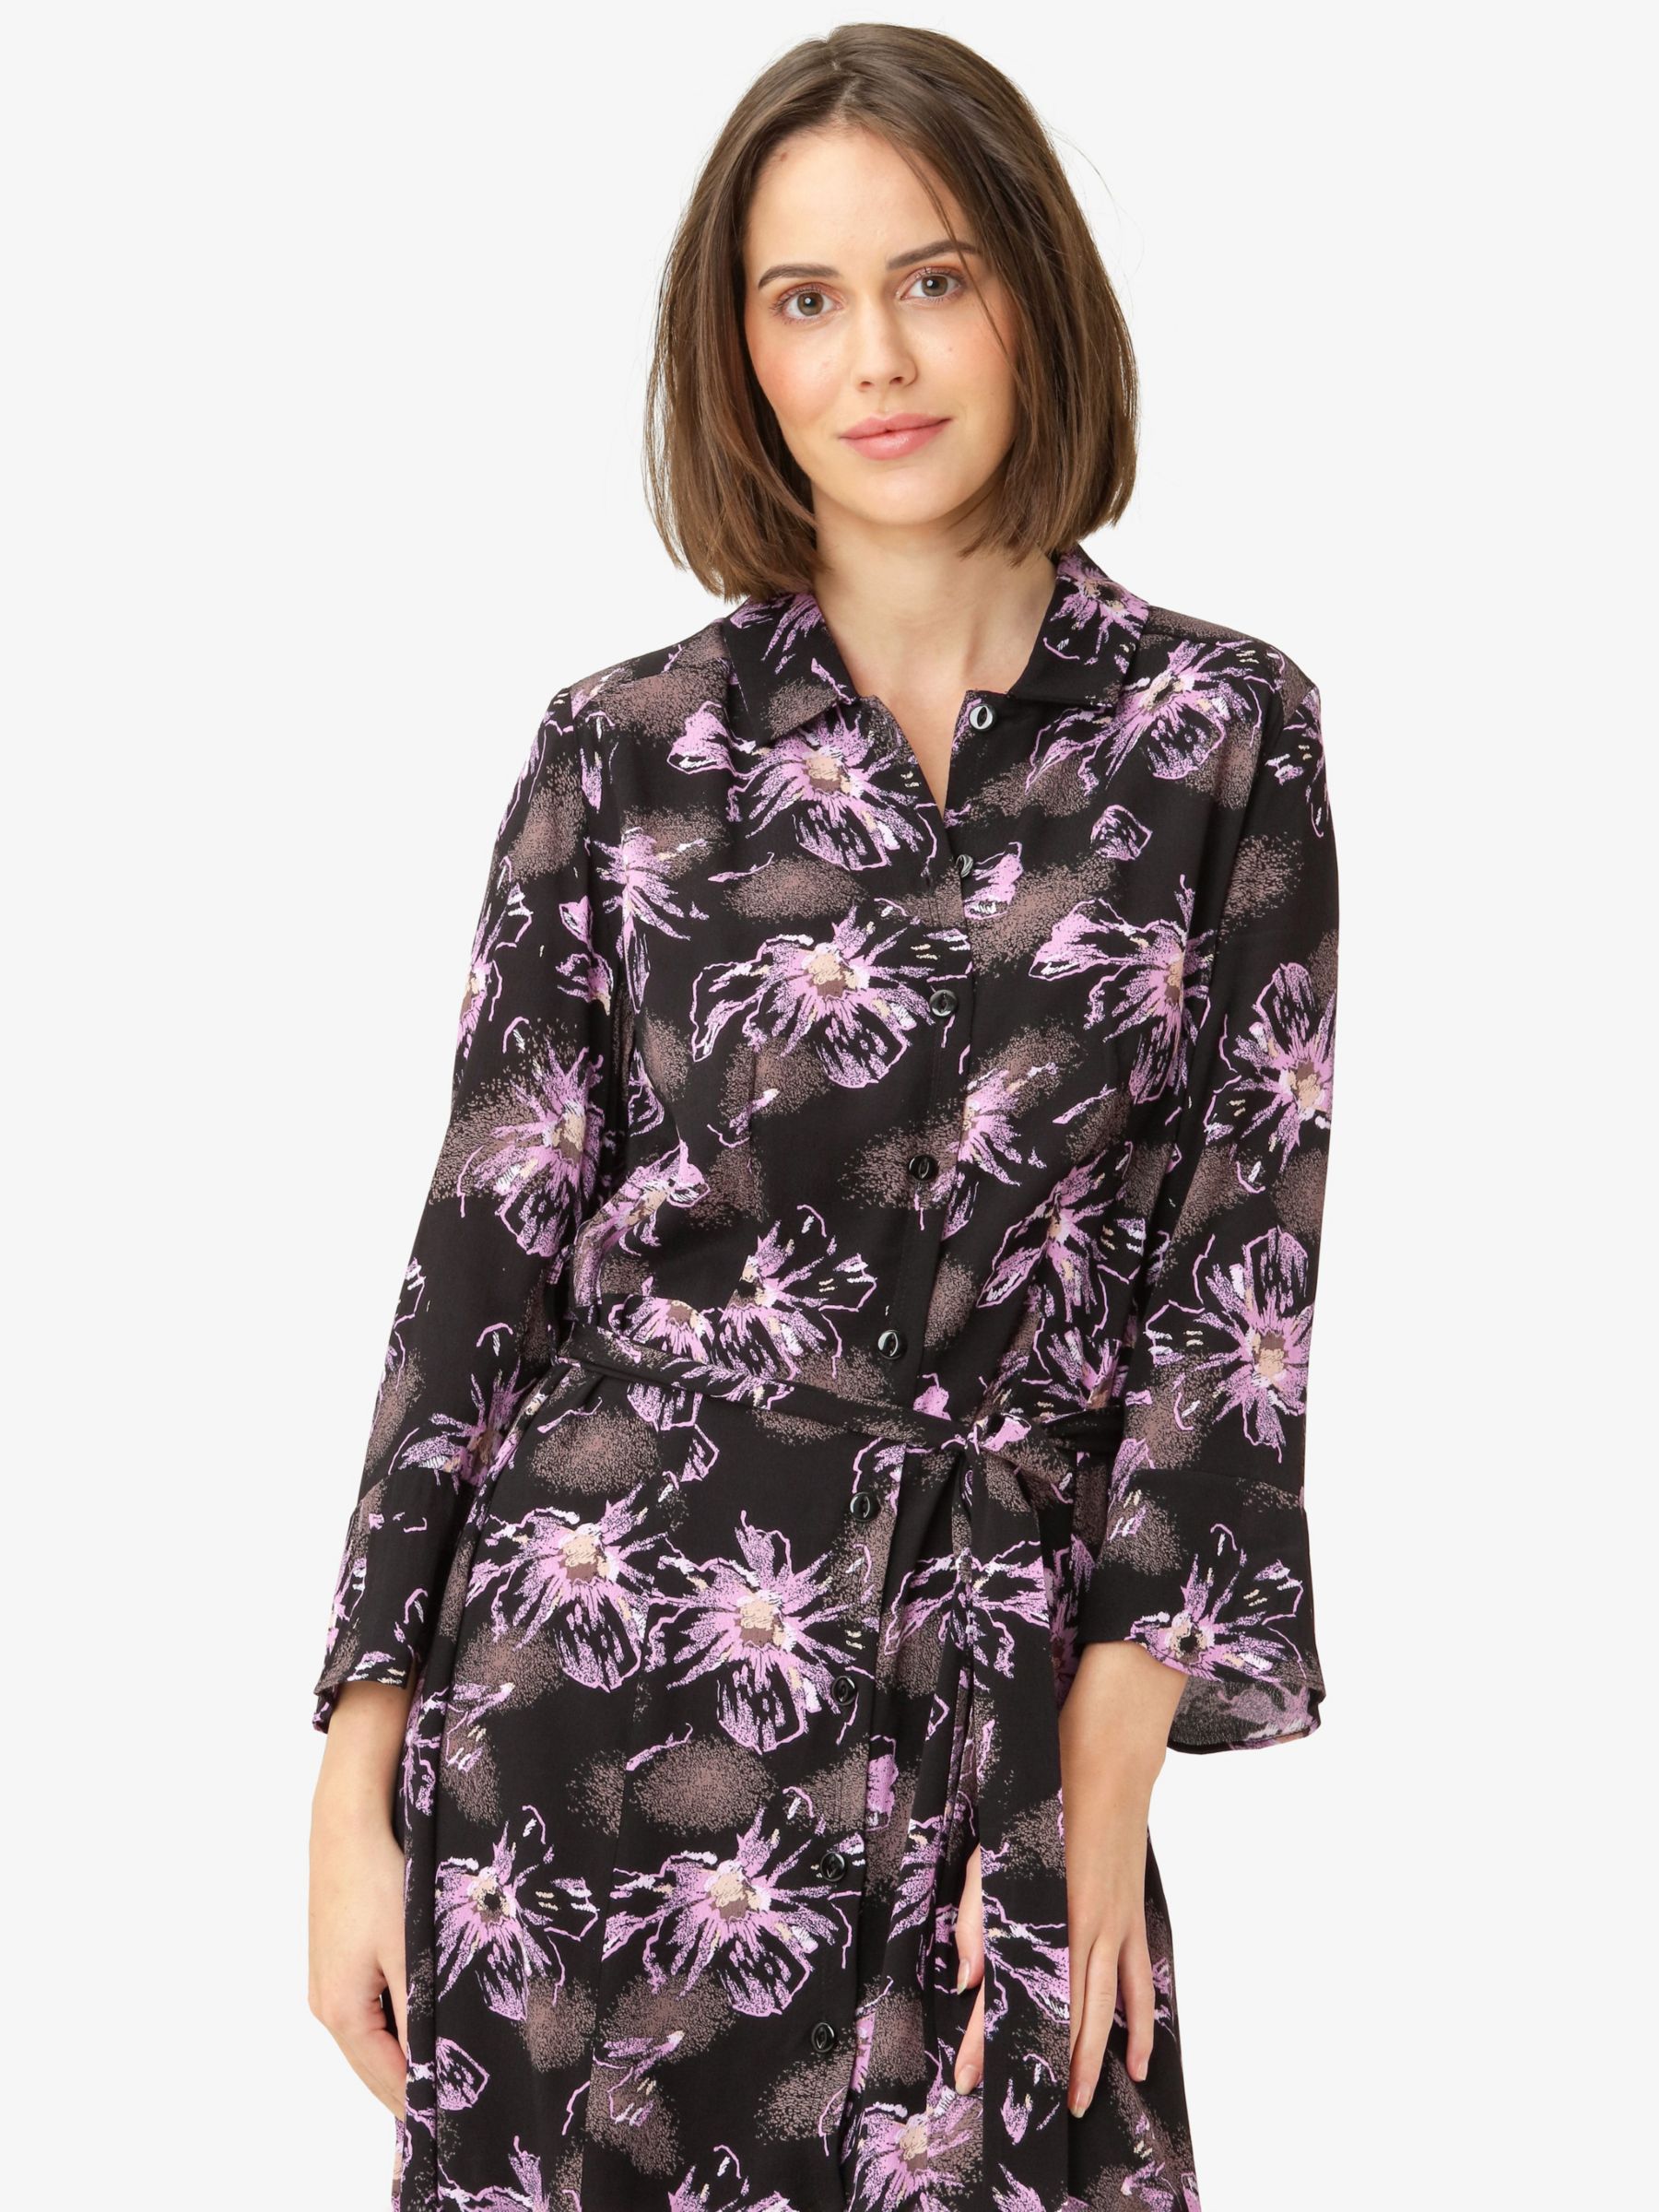 Noa Noa Liva Floral Midi Shirt Dress, Black/Purple, 18